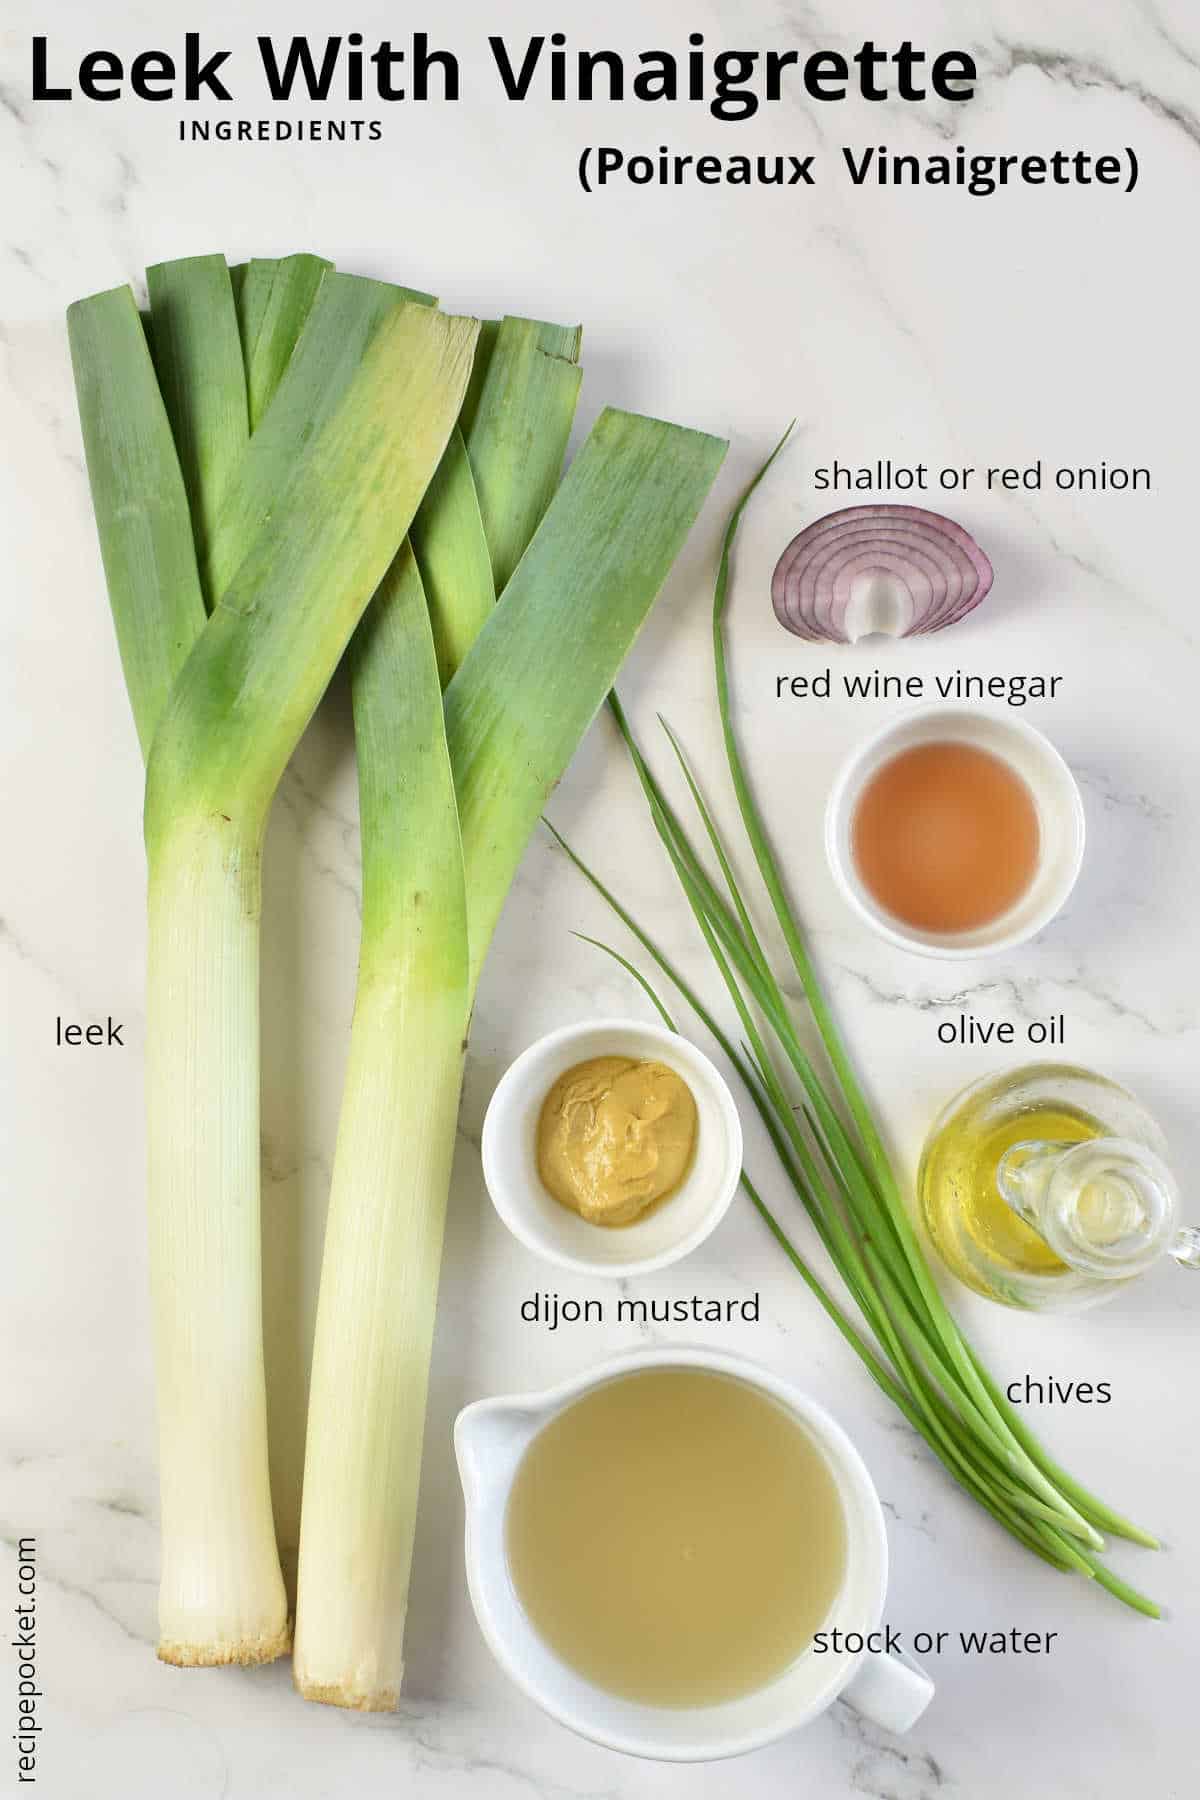 Image showing ingredients needed to make leek vinaigrette.